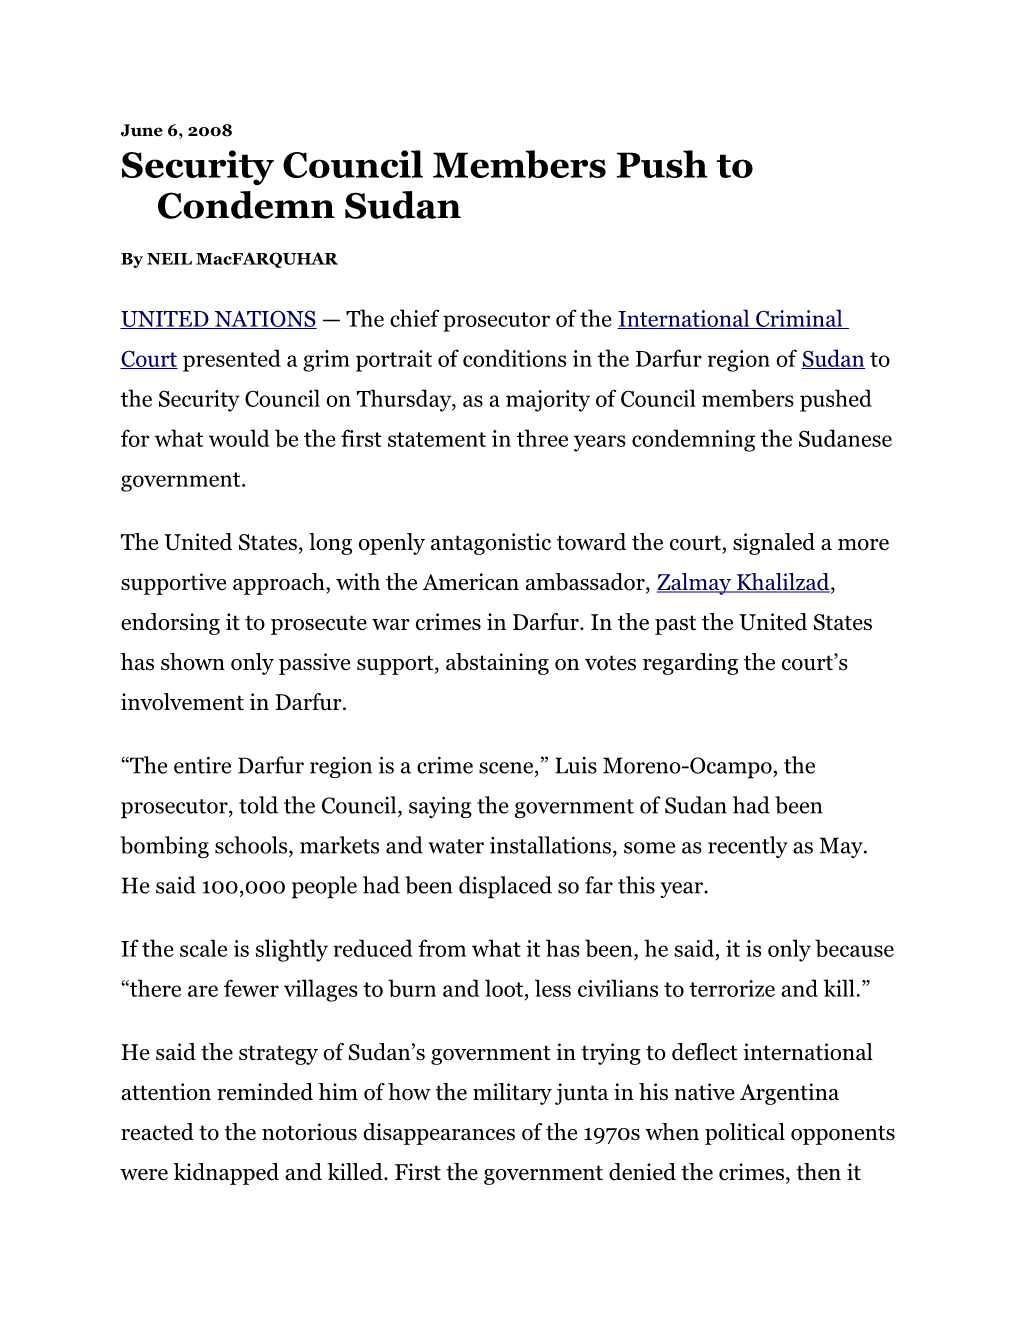 Security Council Members Push to Condemn Sudan